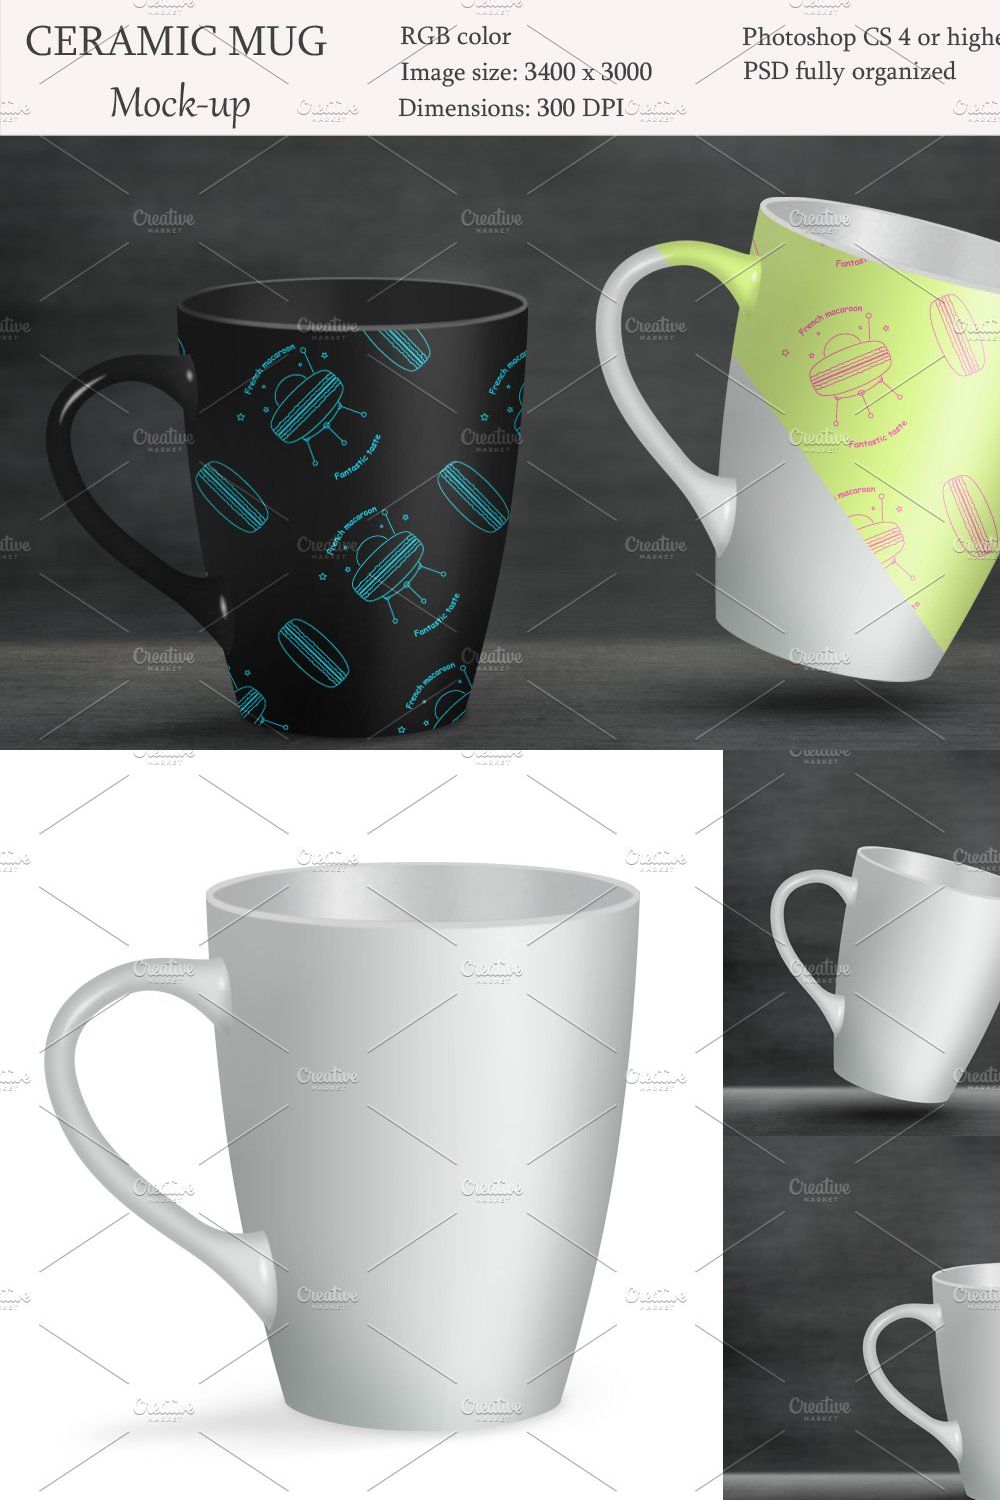 Ceramic mug mockup. Product mockup. pinterest preview image.